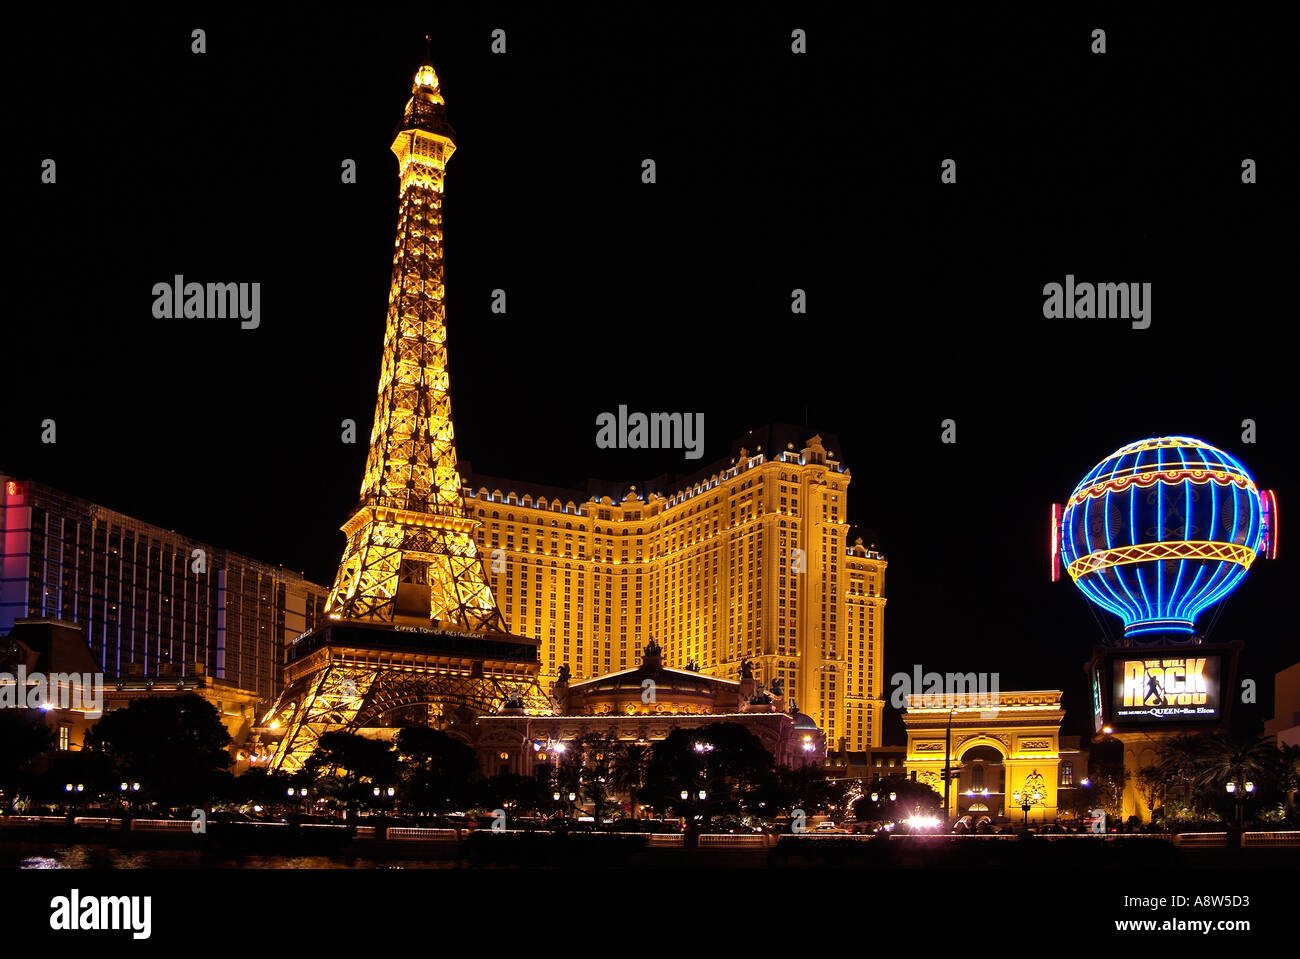 File:DSC33352, Paris Hotel and Casino, Las Vegas, Nevada, USA  (5313670719).jpg - Wikimedia Commons